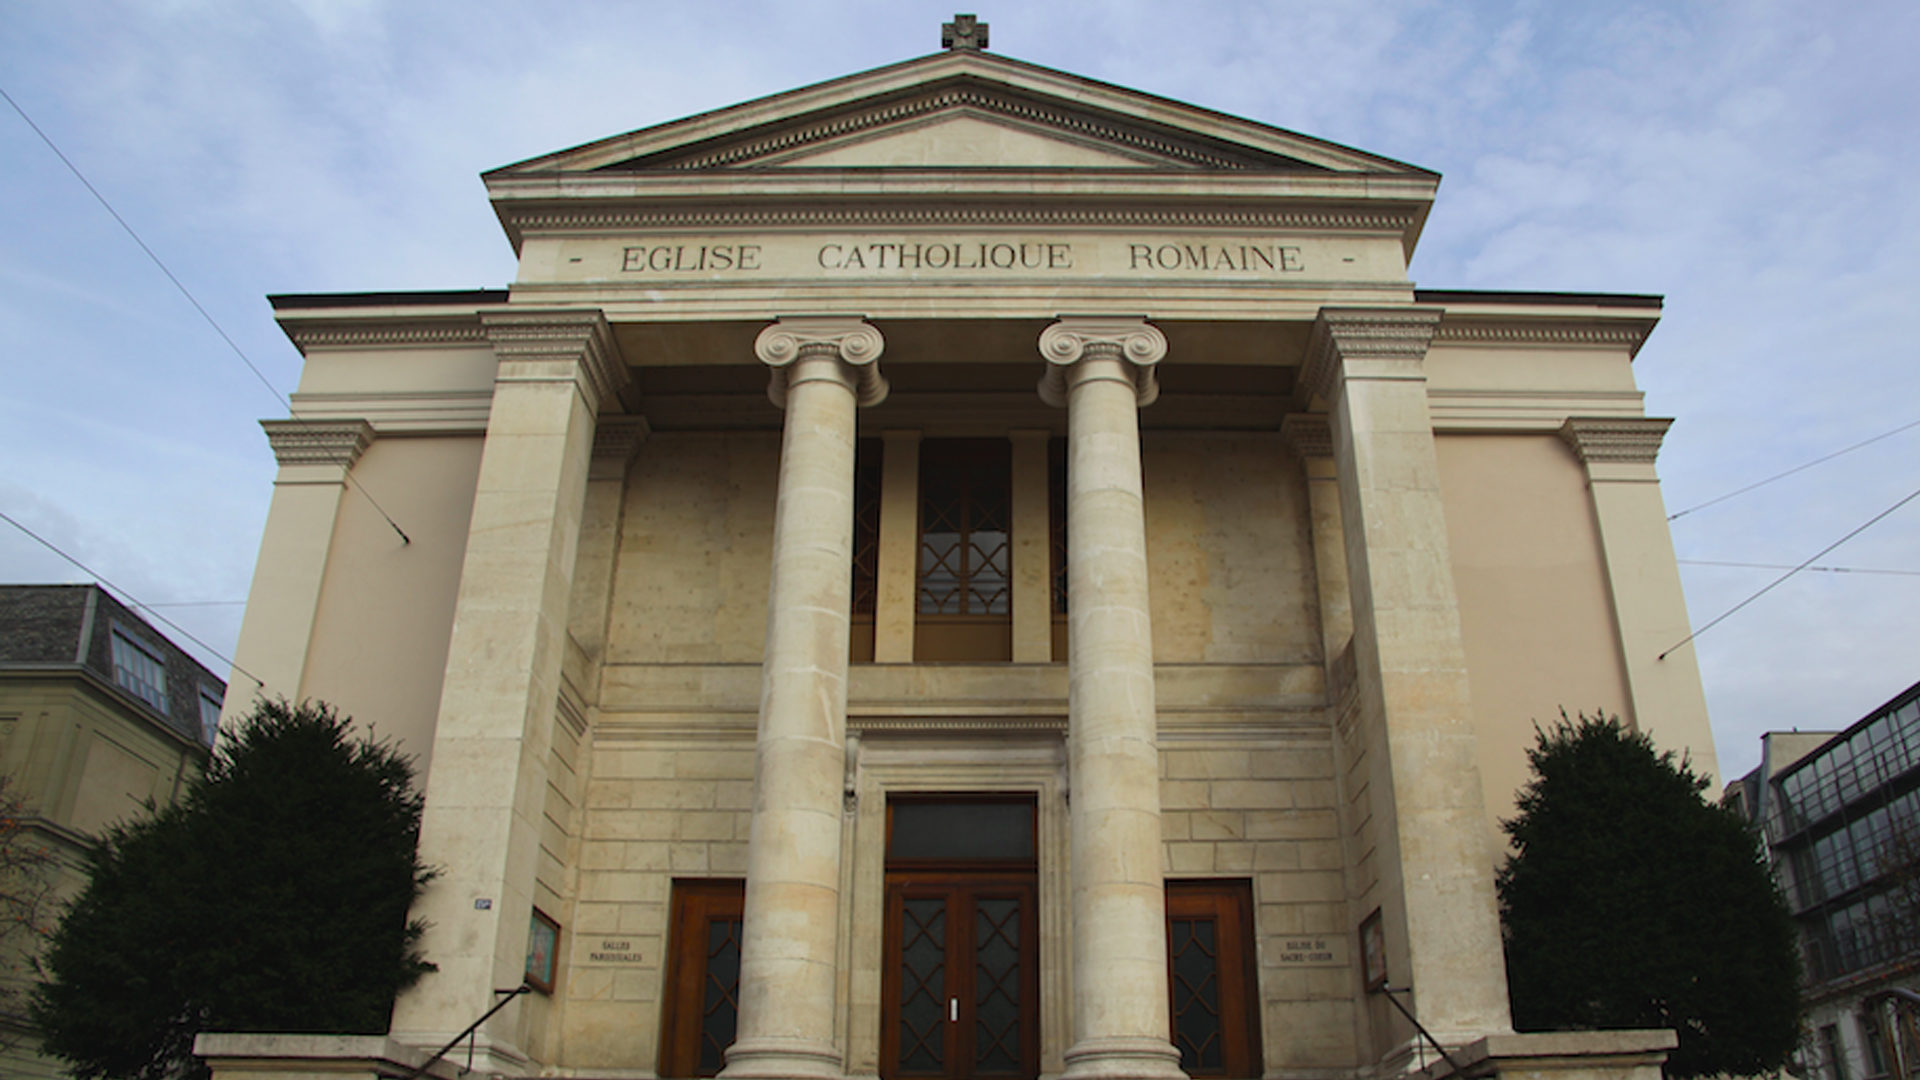 Kirche "Sacré Coeur": Vorderfront im klassizistischen Stil